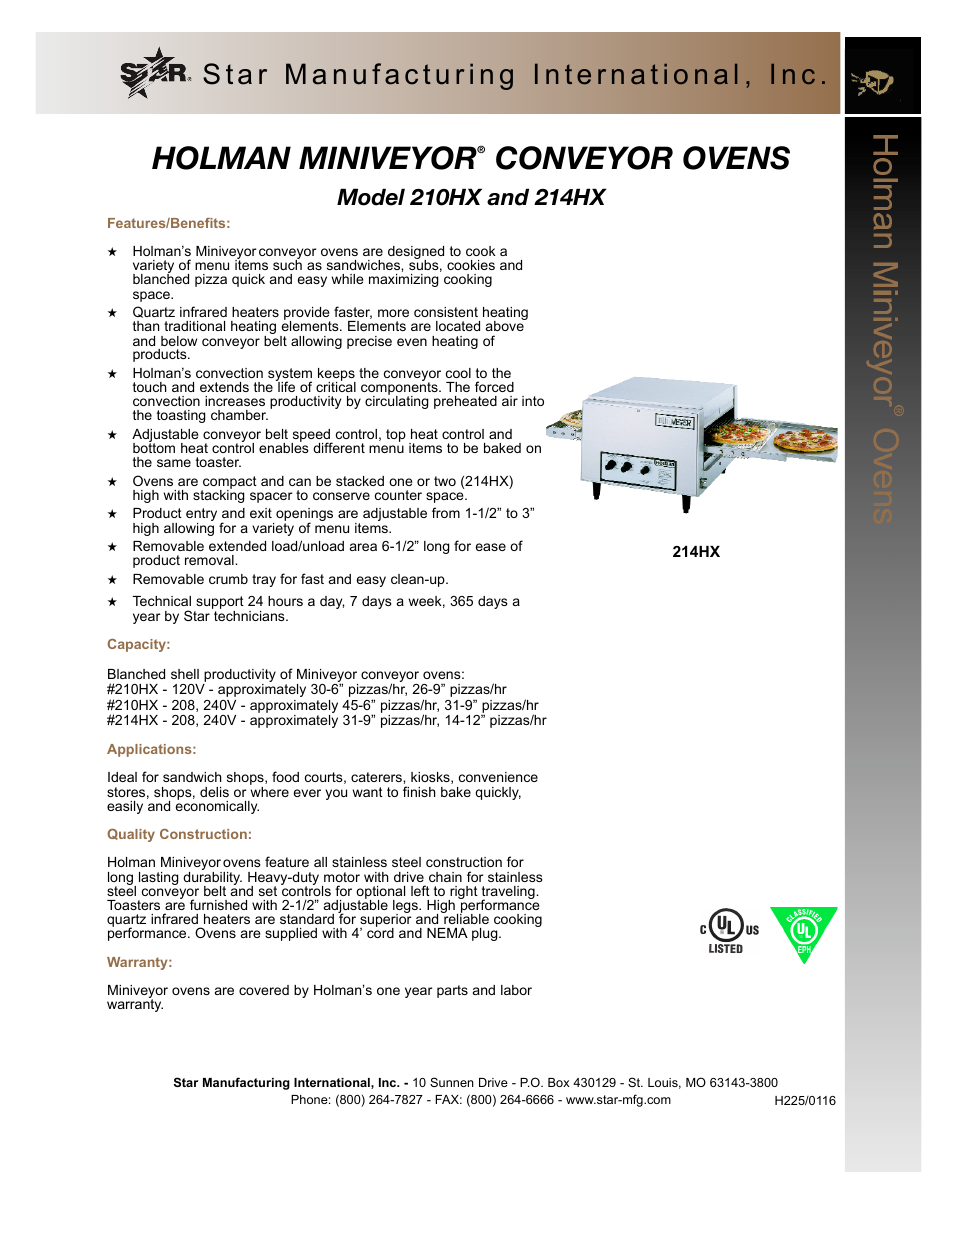 Holman Miniveyor 210HX